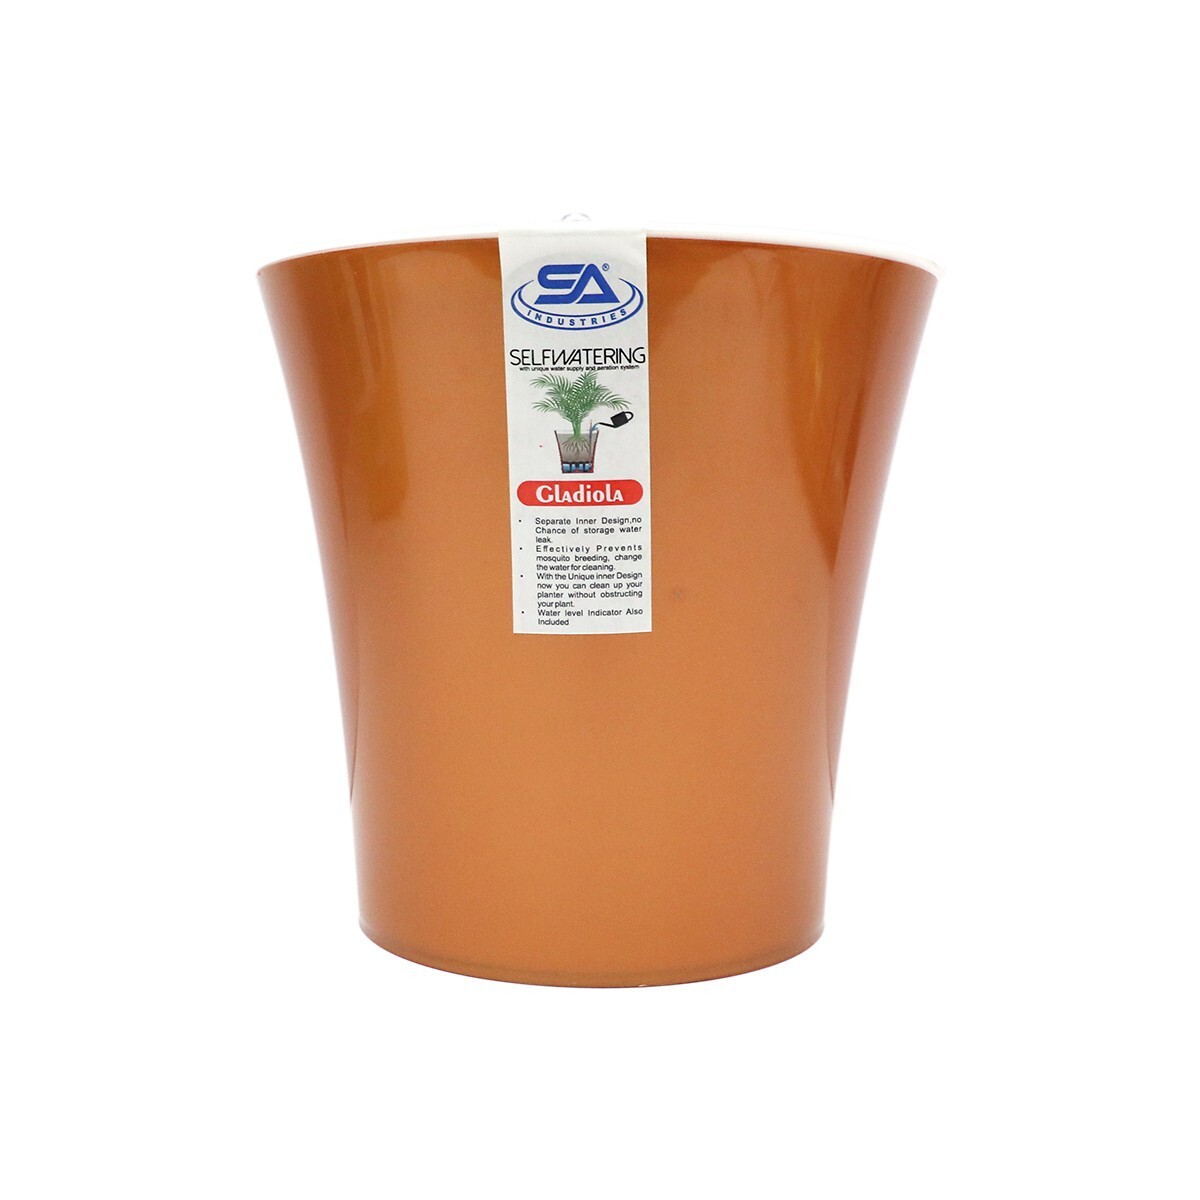 Sanpio Plant Pot Gladiola-1010